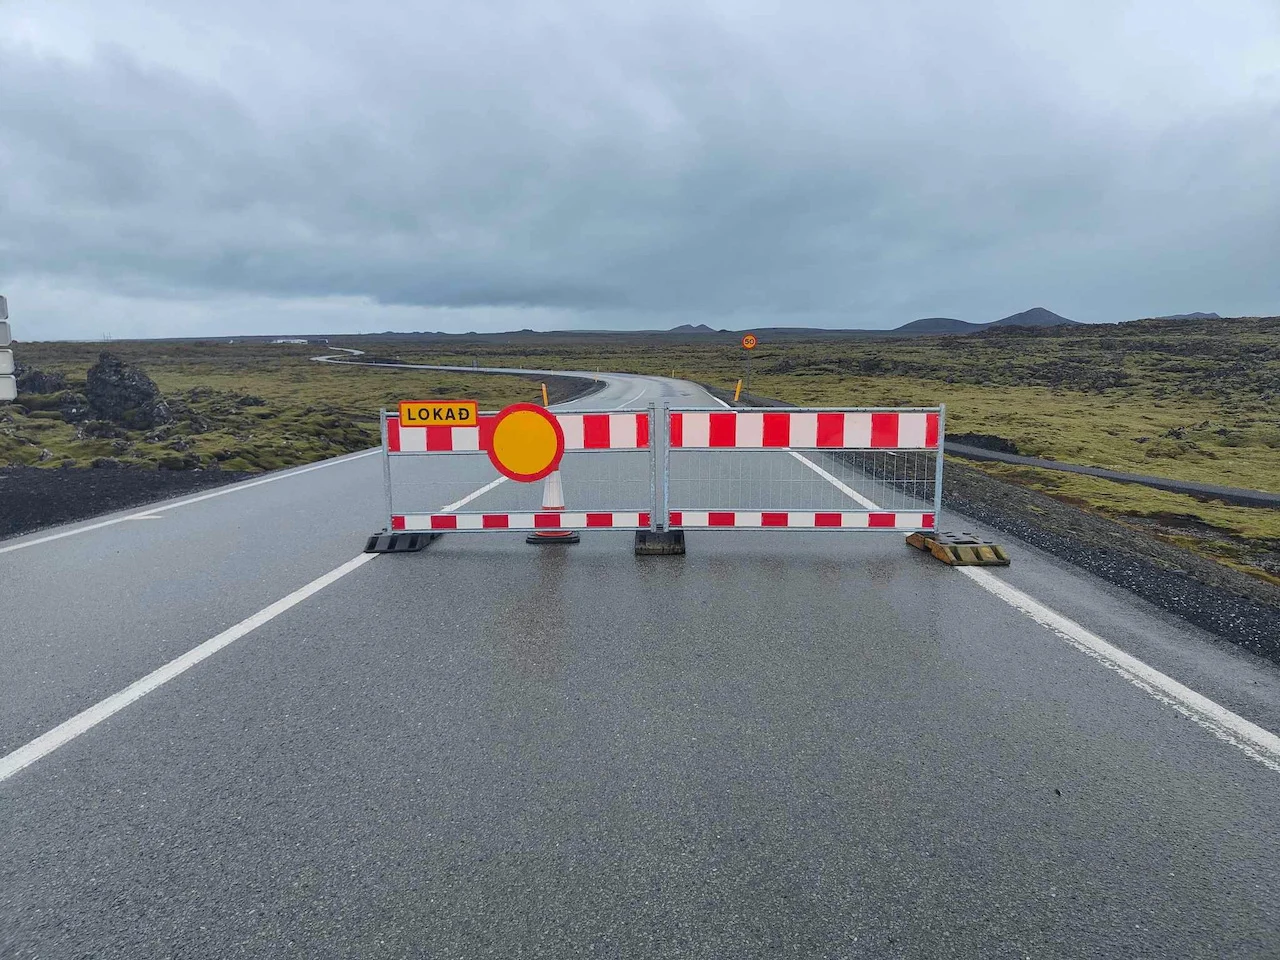 ICELAND-VULCANO/Road Administration of Iceland via Facebook/ Handout via REUTERS